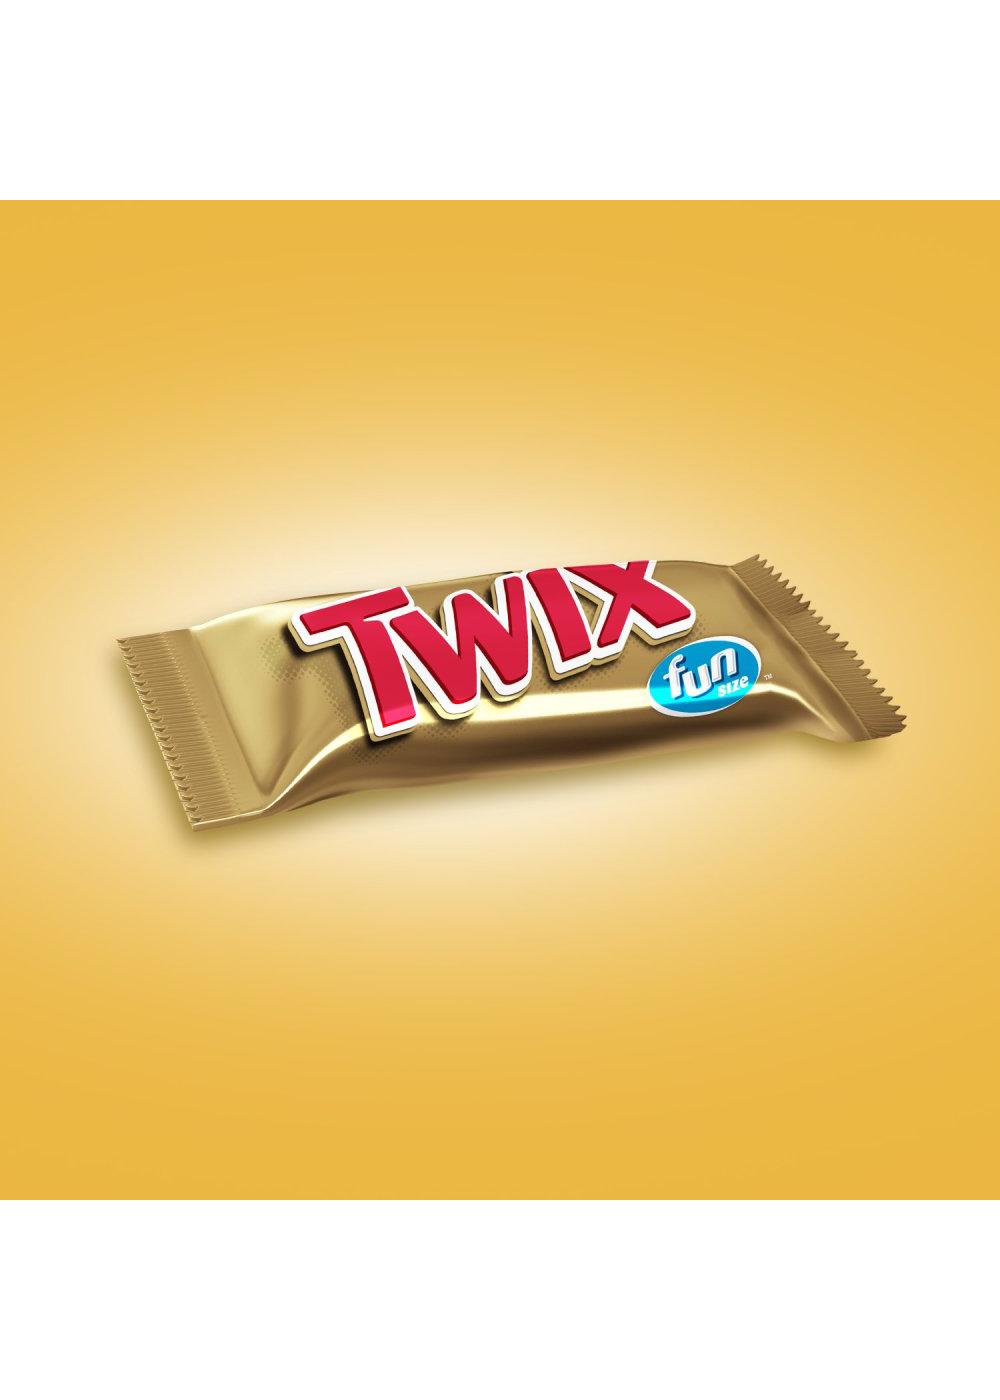 Twix Chocolate Fun Size Candy Bars; image 4 of 5